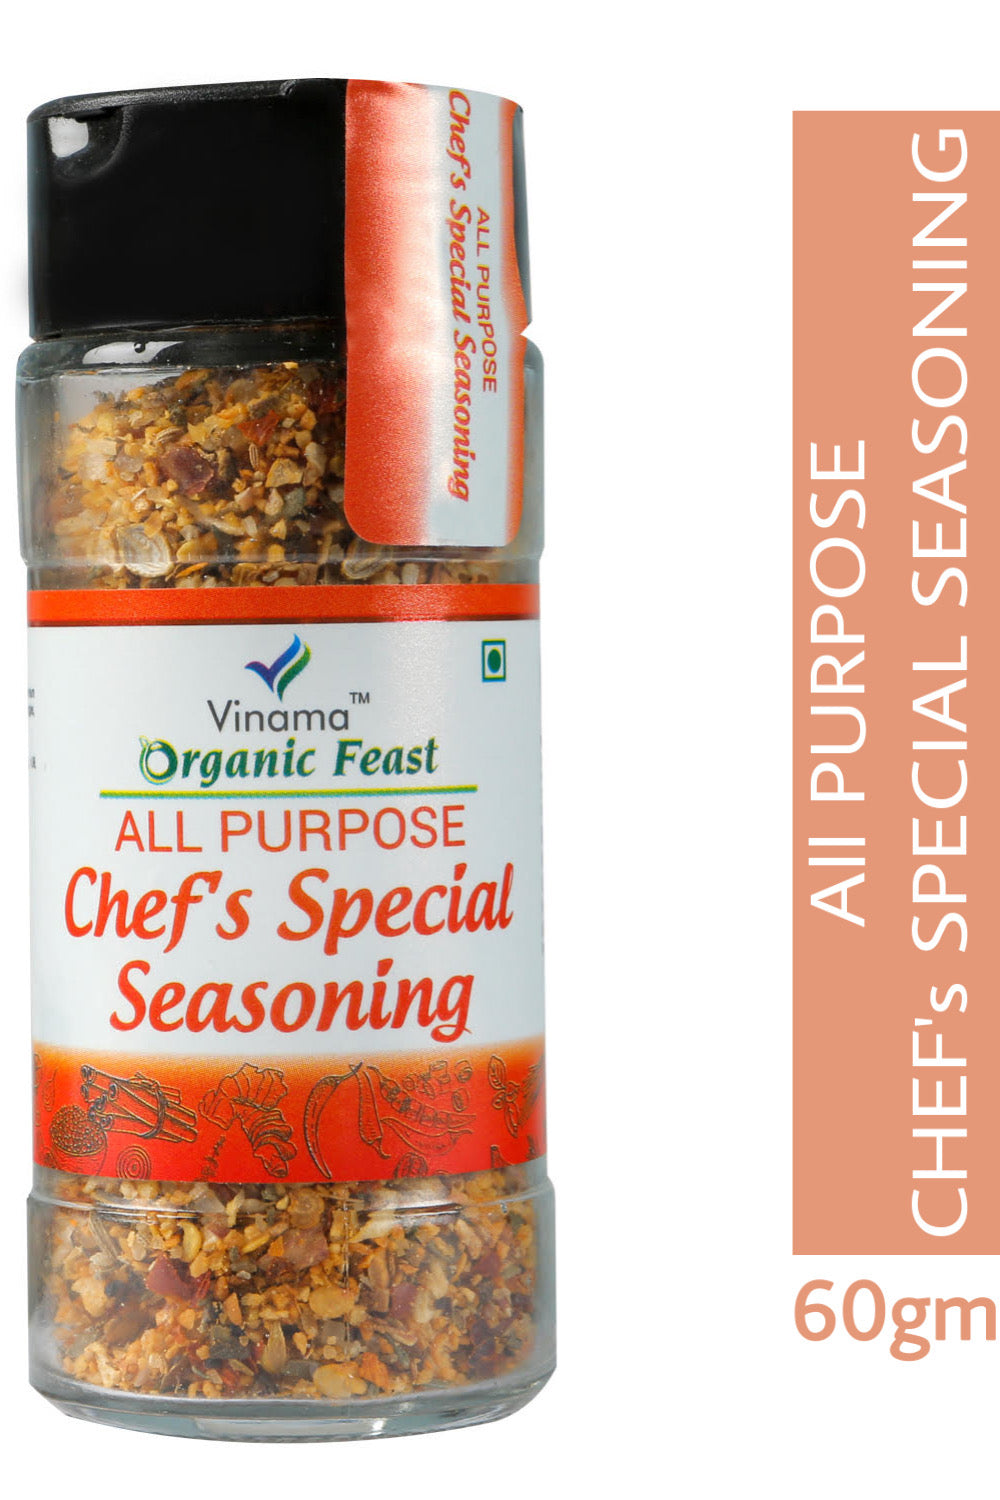 Vinama Organic Feast All Purpose Chef's Special Seasoning